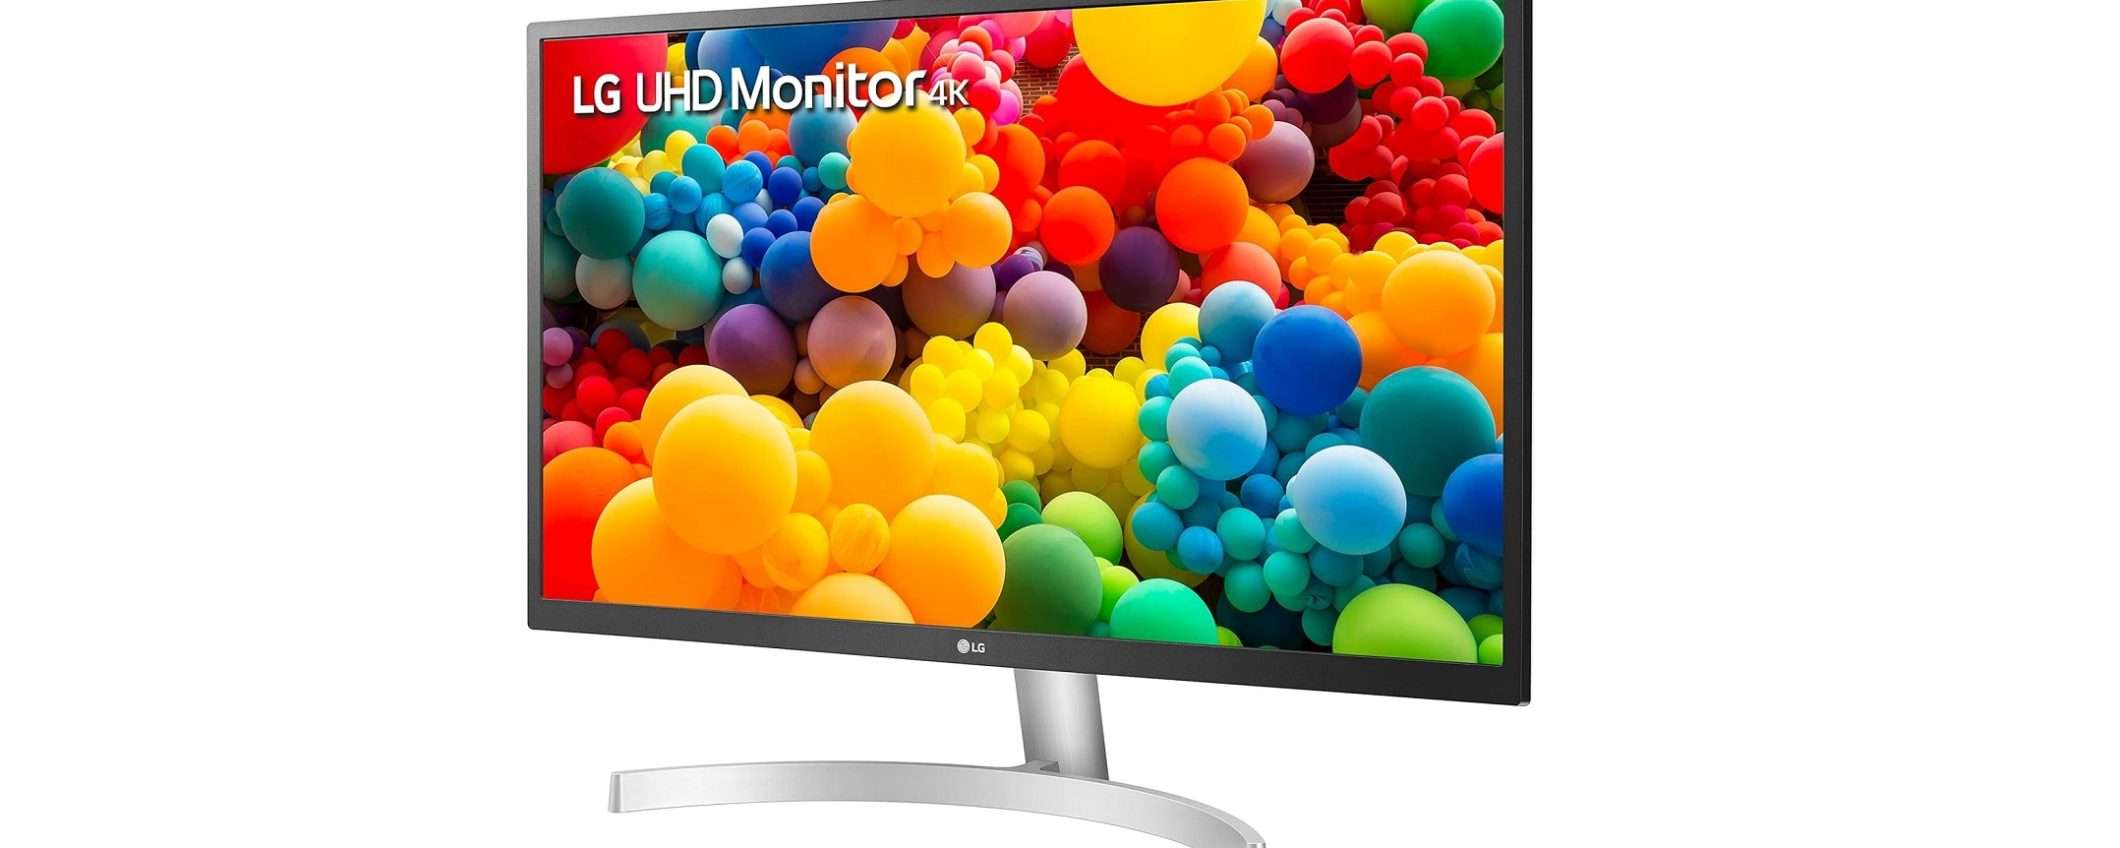 Monitor 4K LG in offerta a 249€ su Amazon: è un BEST BUY (-150€)